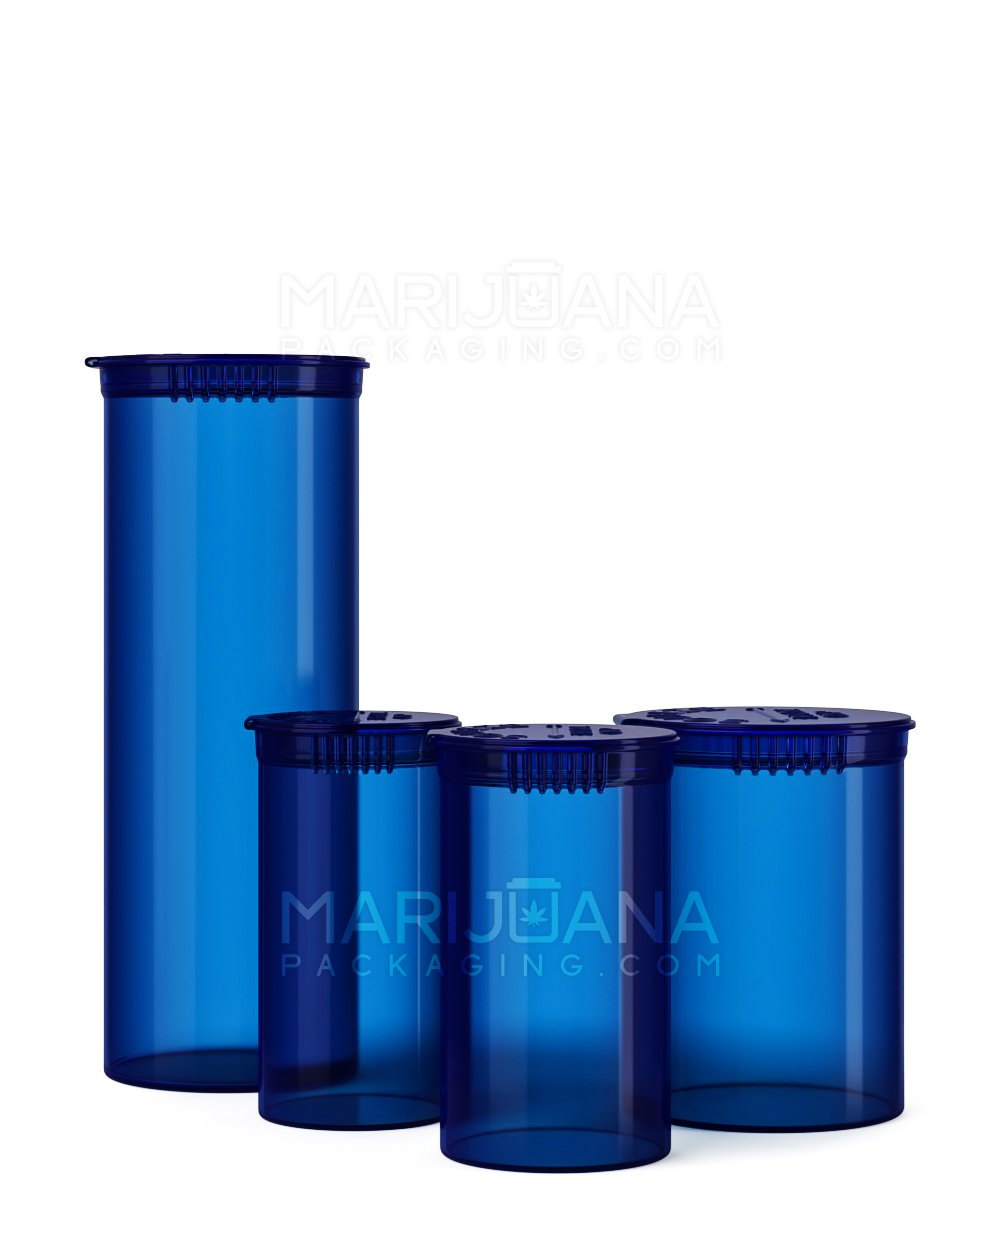 Child Resistant | Transparent Blue Pop Top Bottles | 30dr - 7g - 150 Count - 5